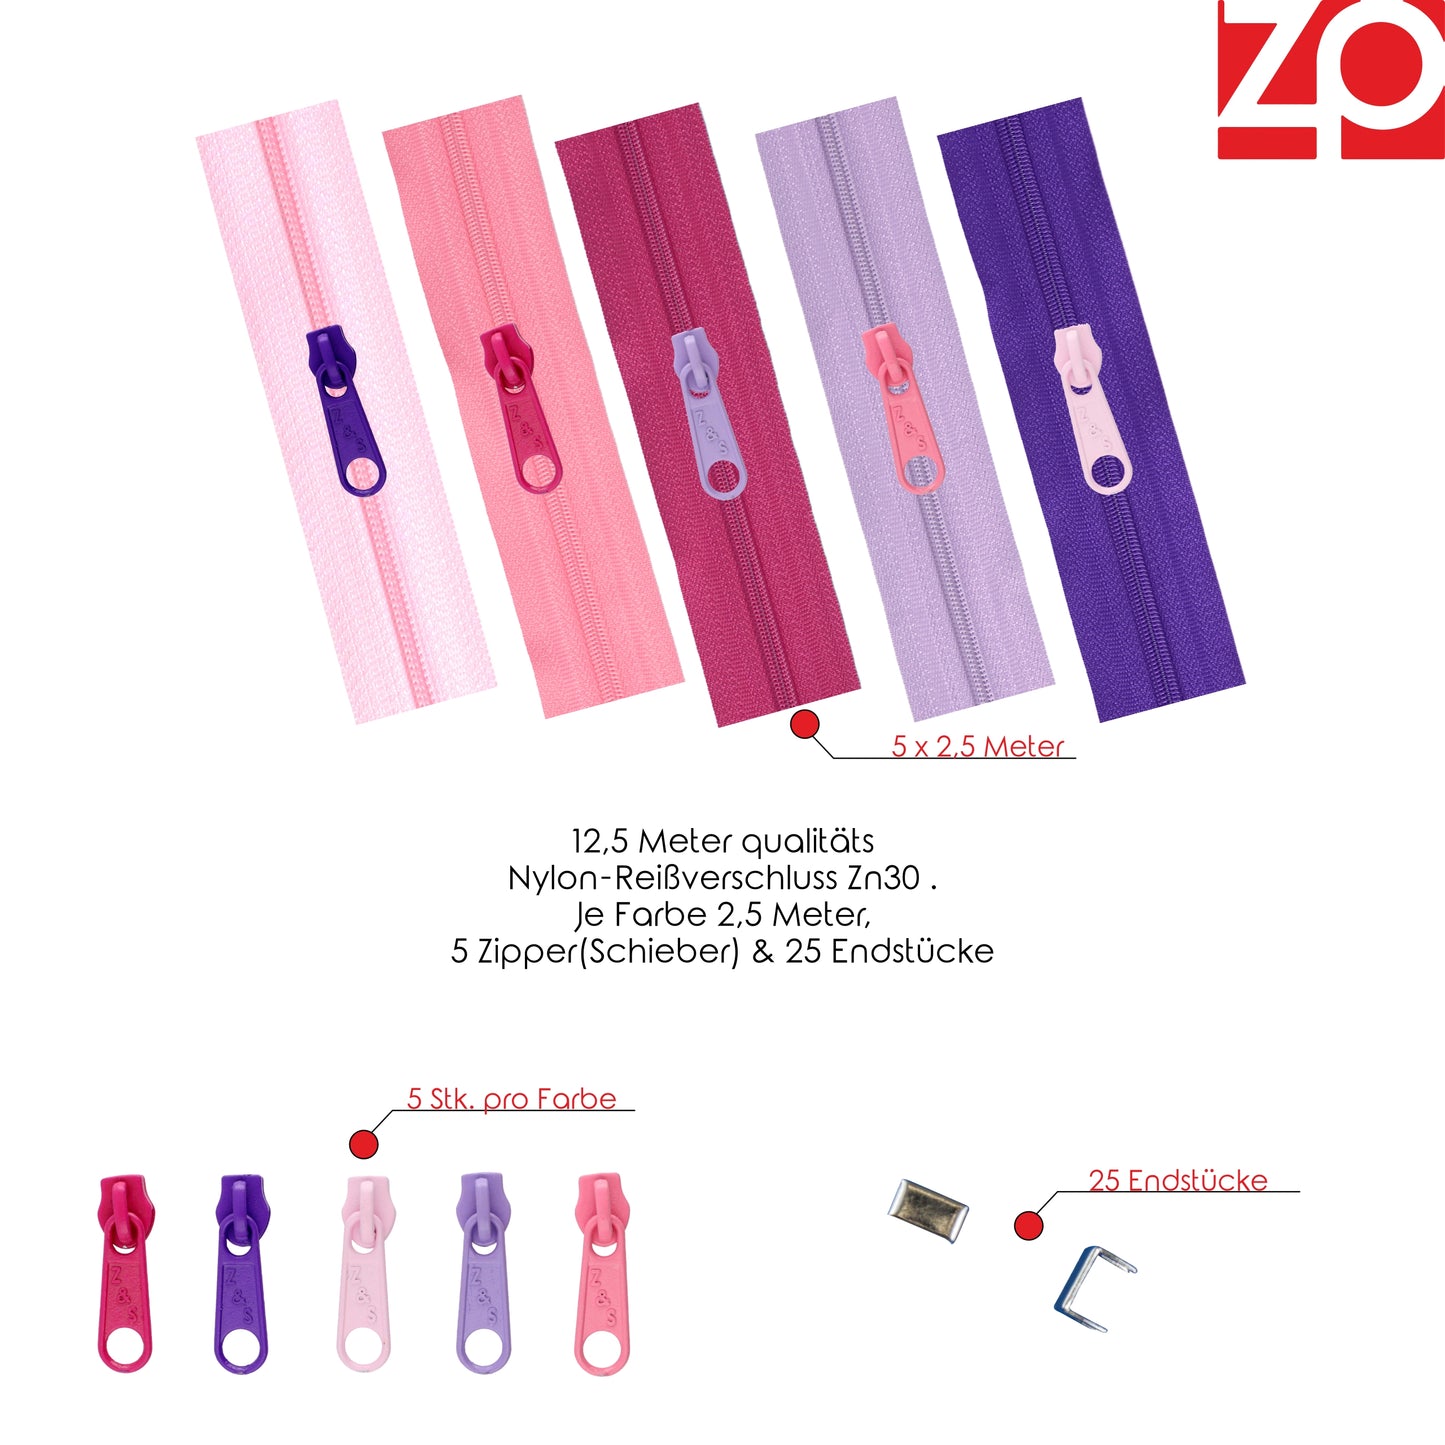 ZIPP AND SLIDE - endless zipper set with slider 3mm 12.5 meters - nickel free - color set no. 10 The original